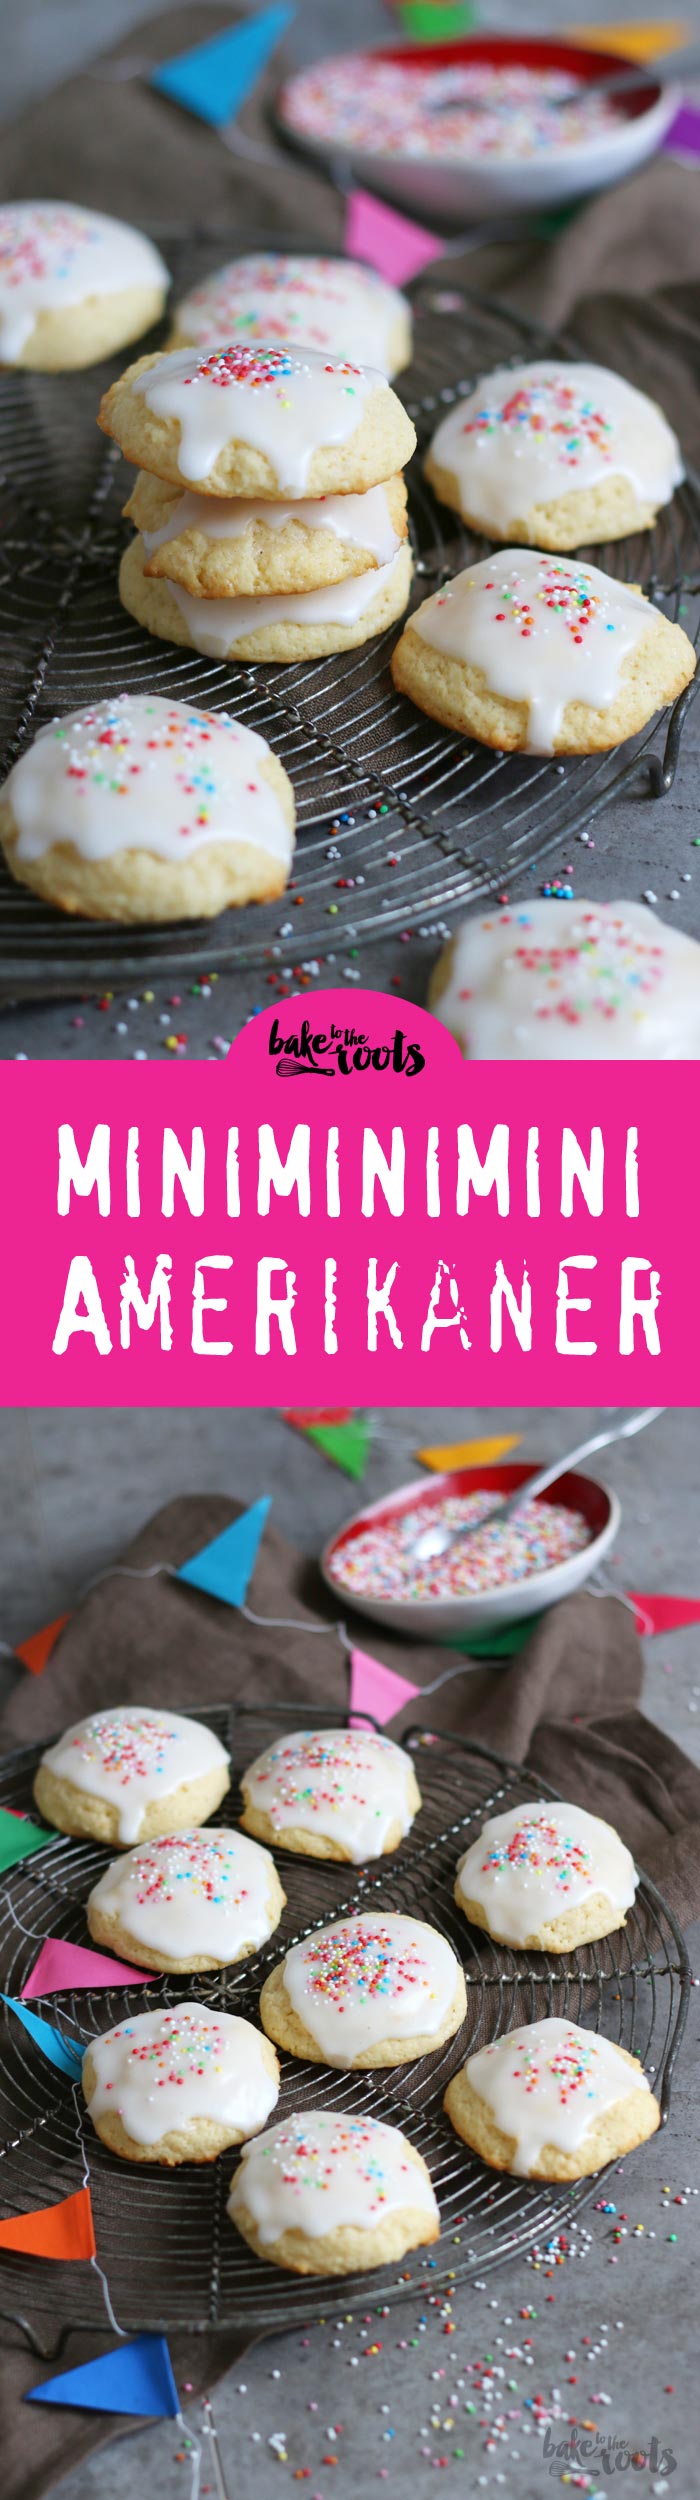 Mini Amerikaner | Bake to the roots